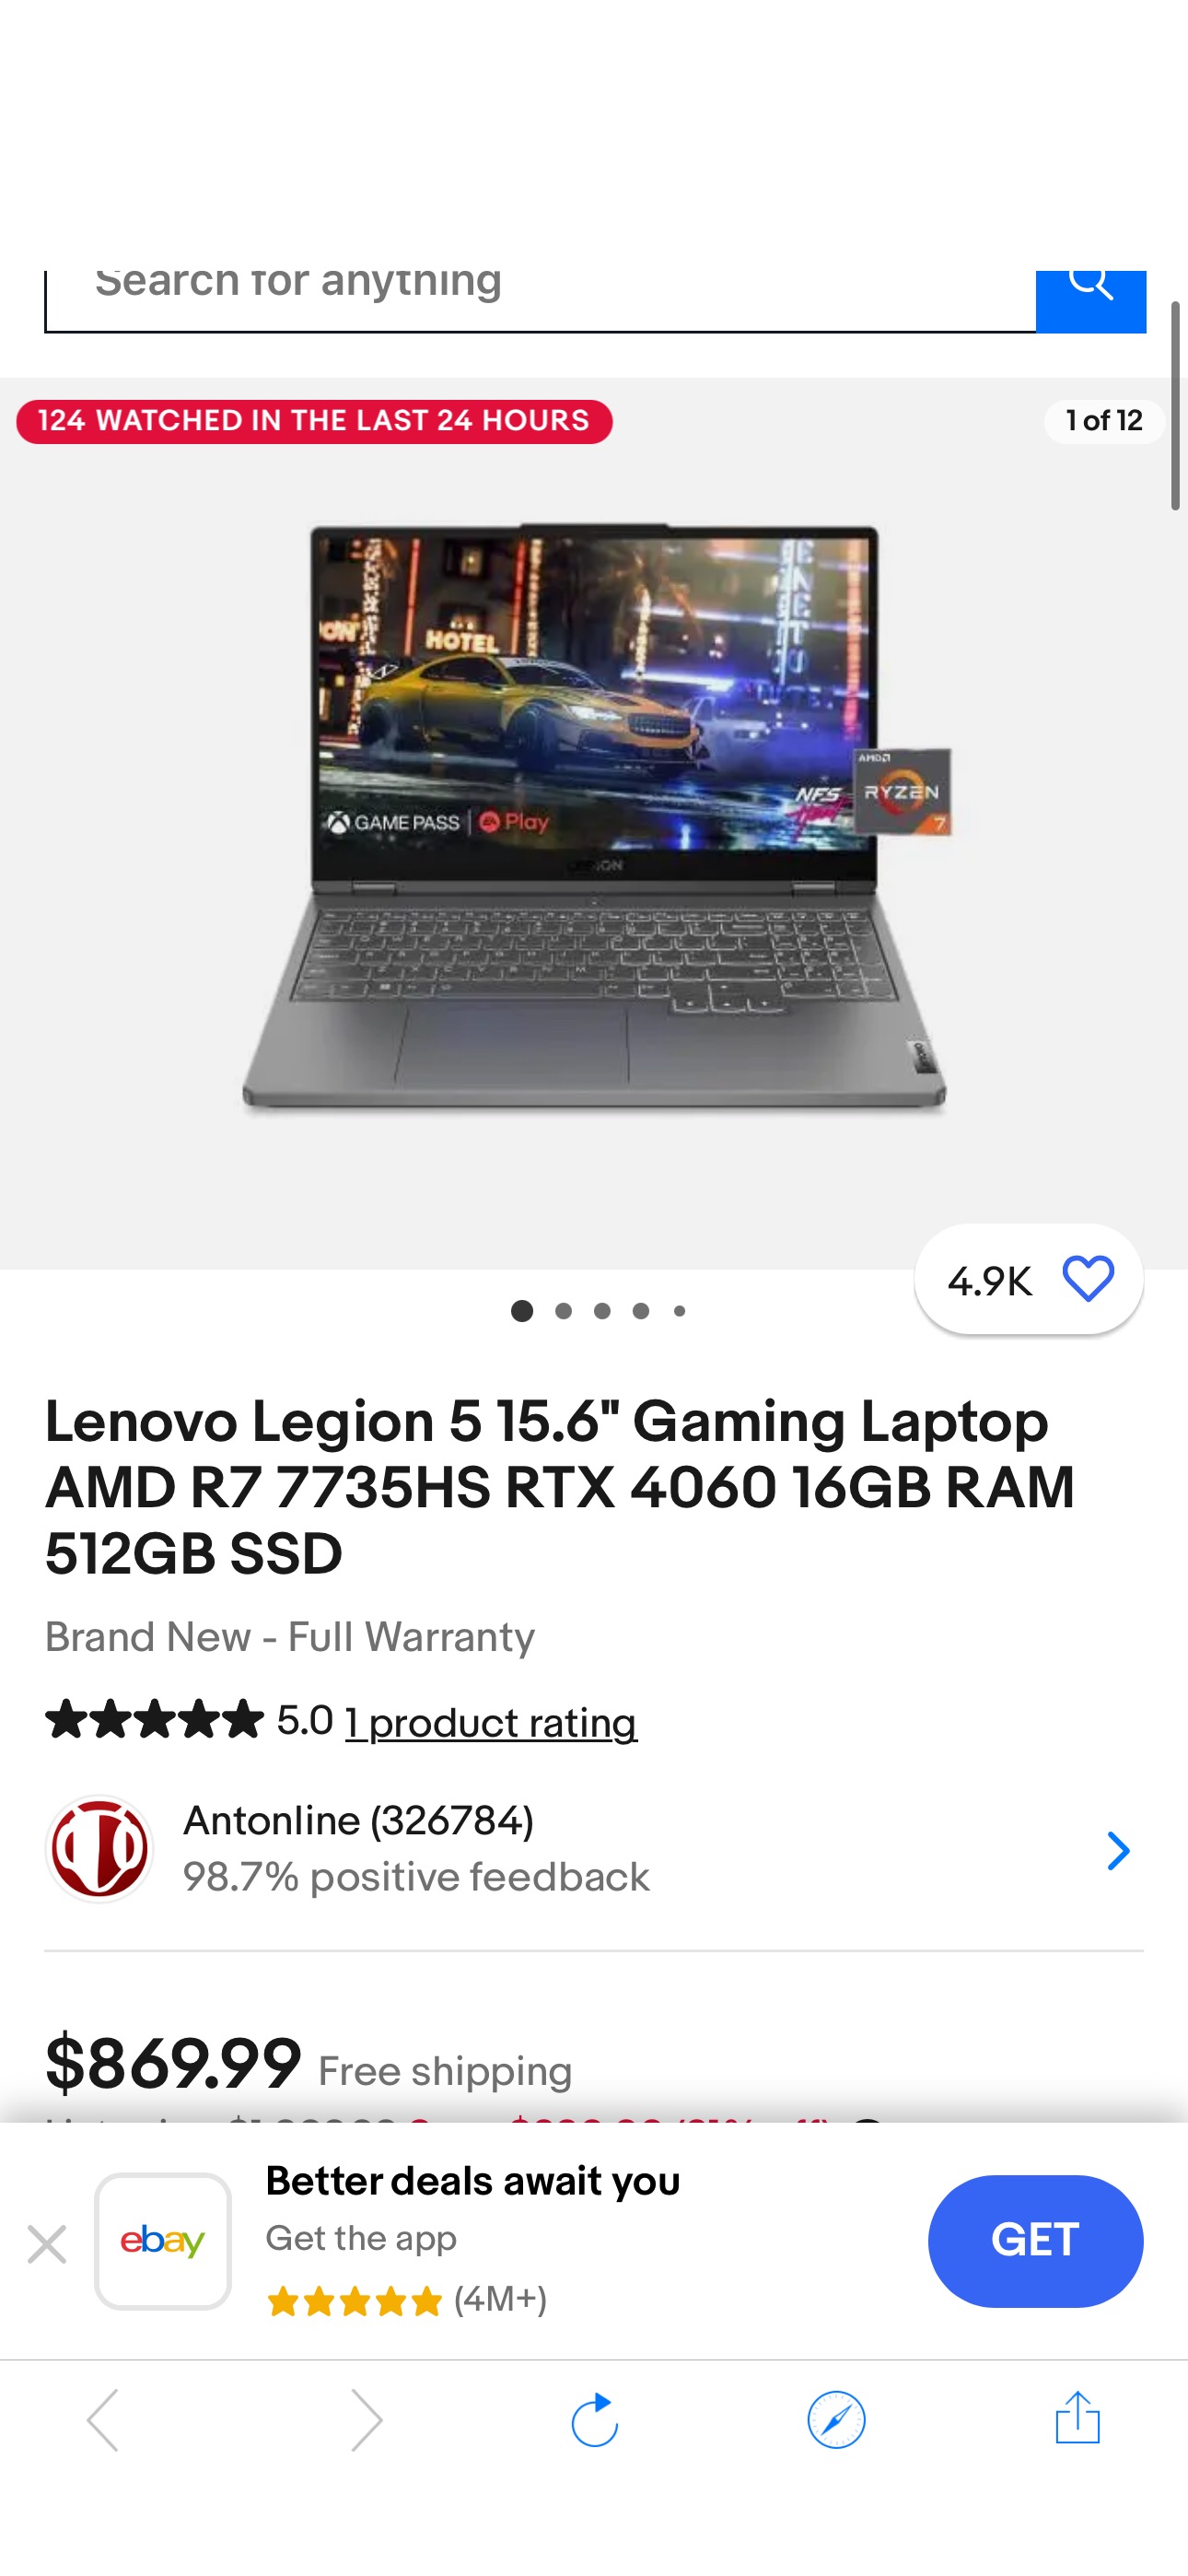 Lenovo Legion 5 15.6" Gaming Laptop AMD R7 7735HS RTX 4060 16GB RAM 512GB SSD 197532658356 | eBay